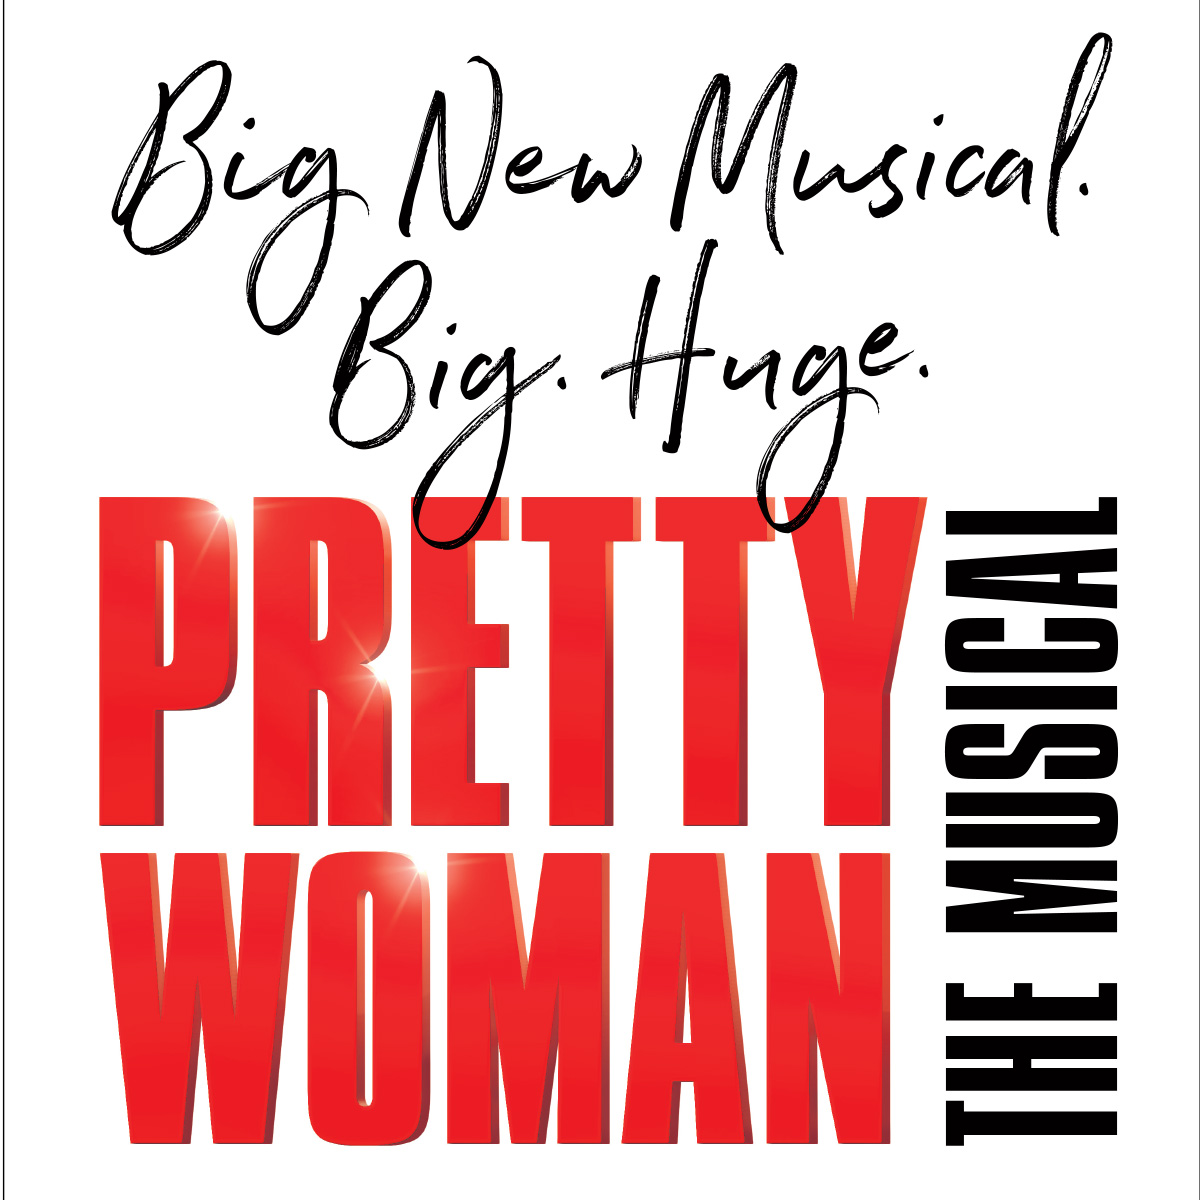 Pretty Woman: The Musical 